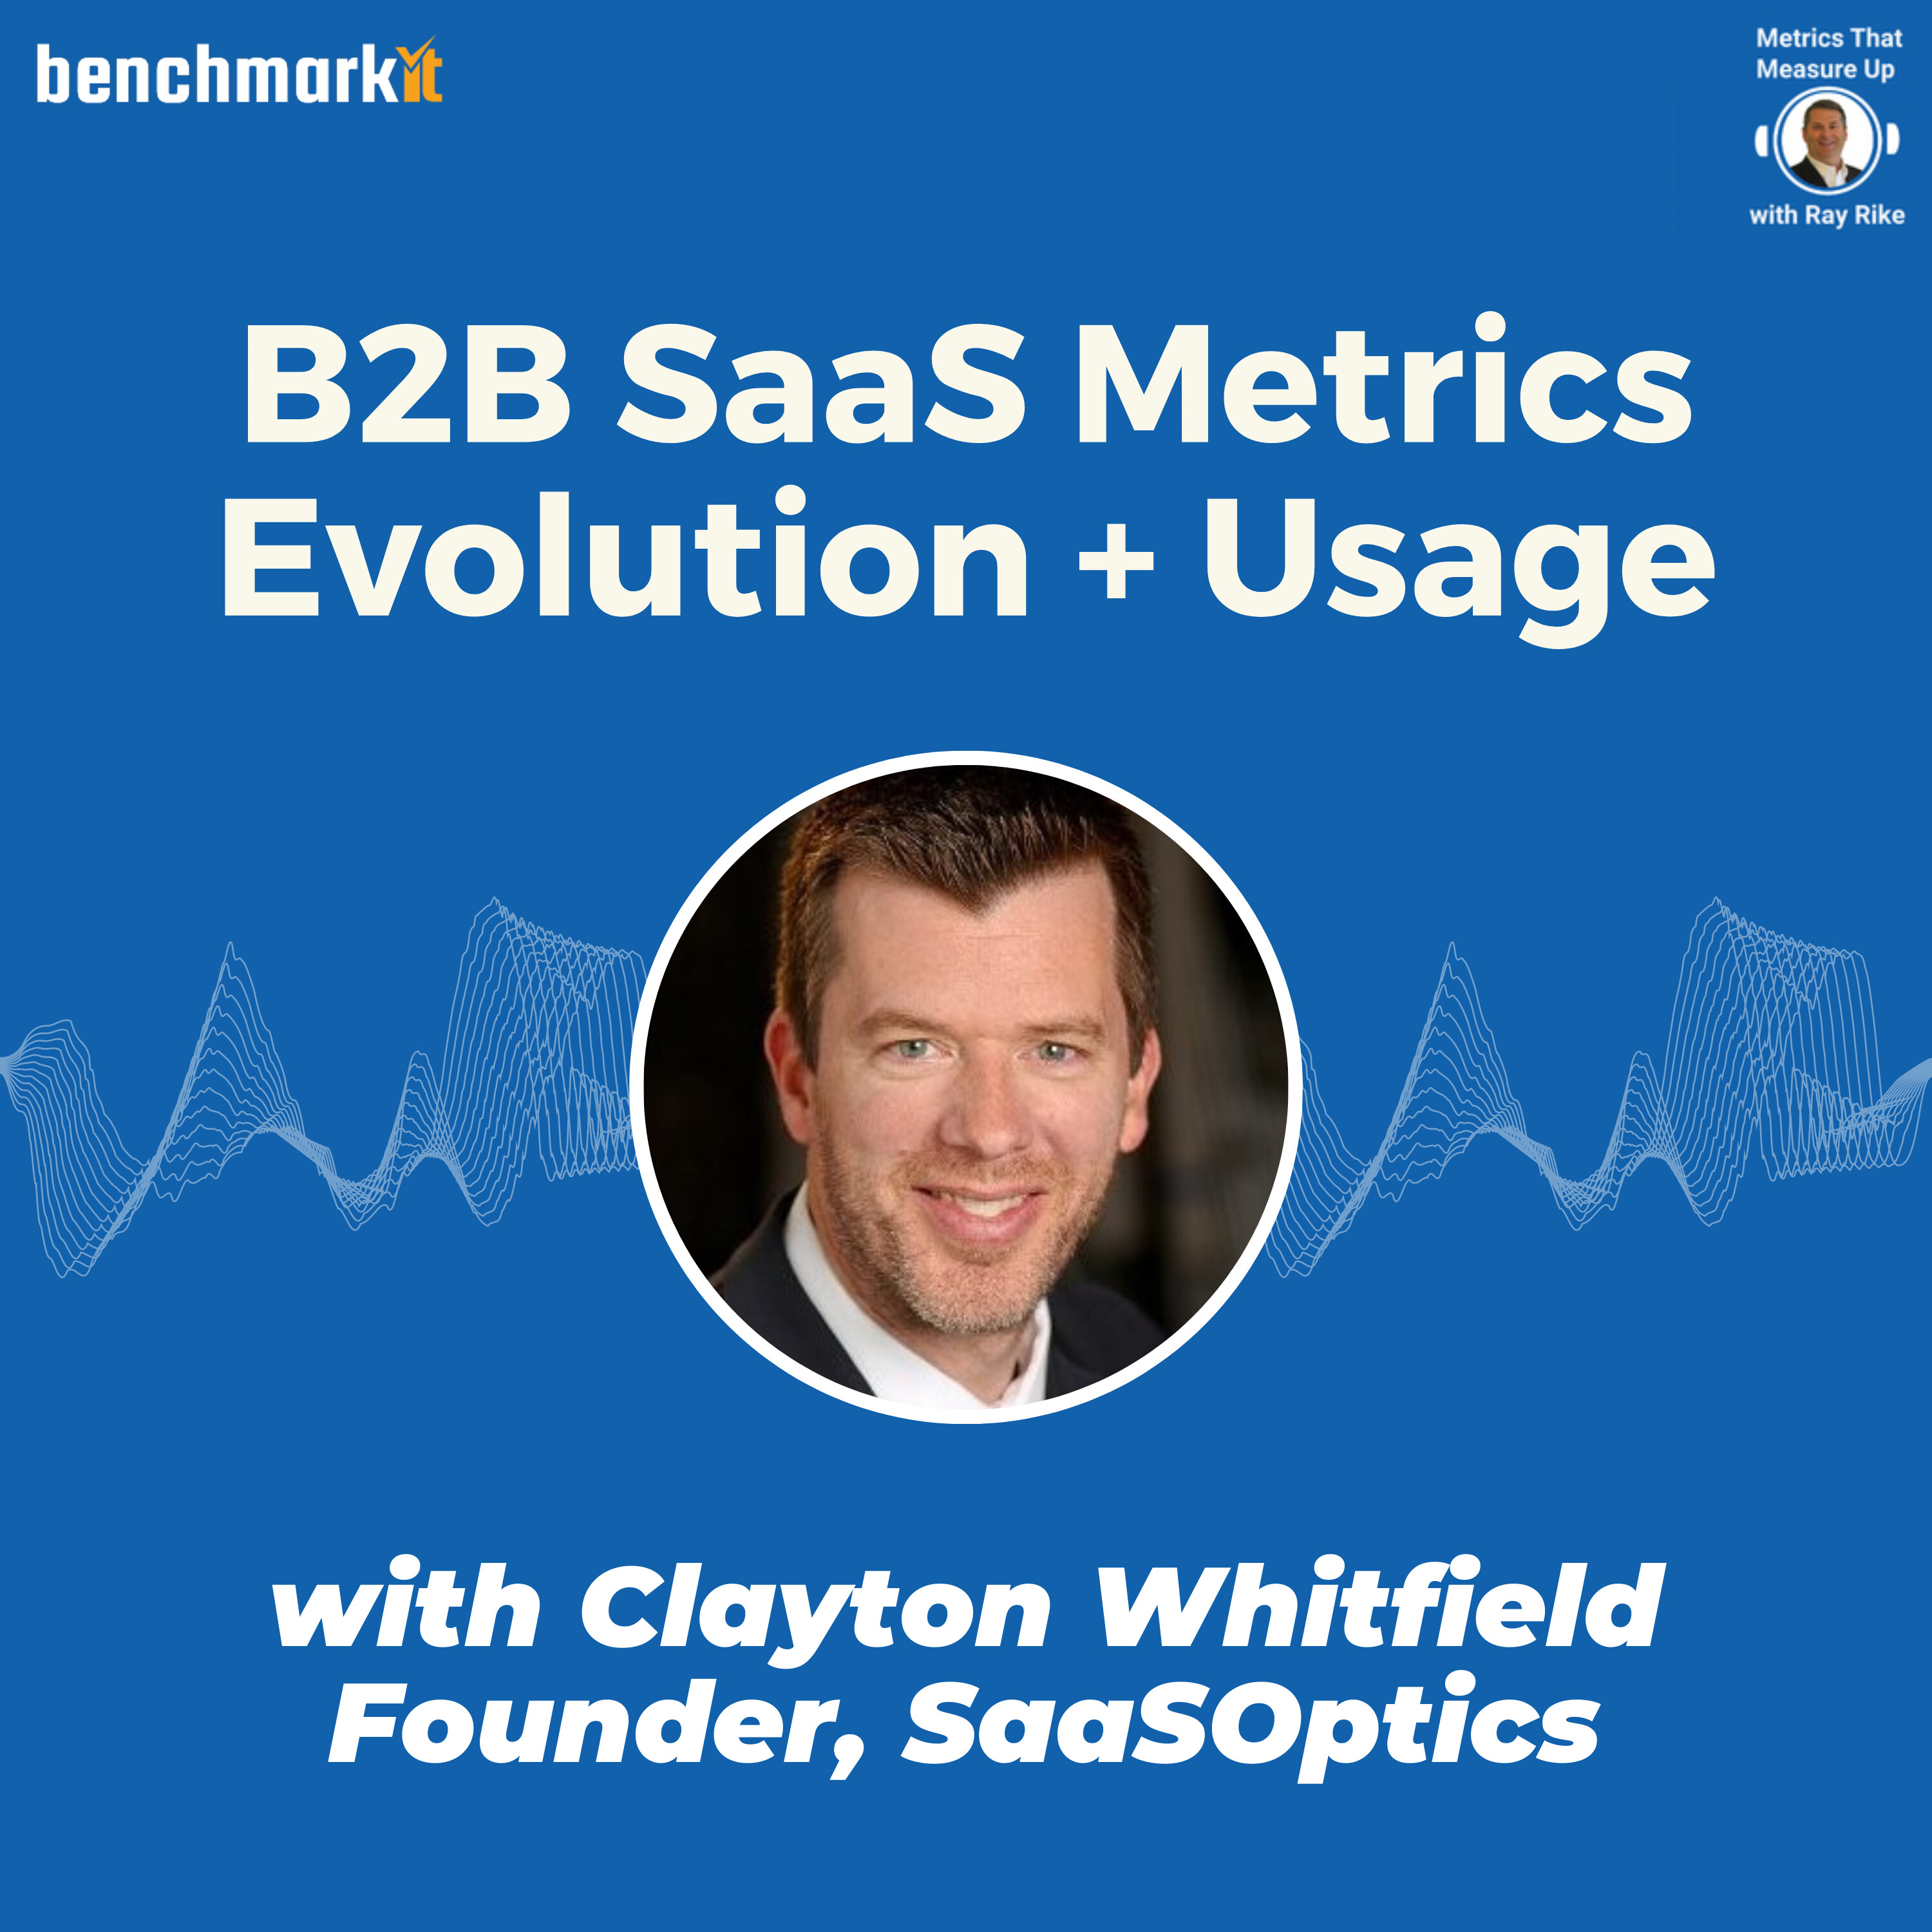 B2B SaaS Metrics Evolution and Usage - with Clayton Whitfield, Founder SaaSOptics